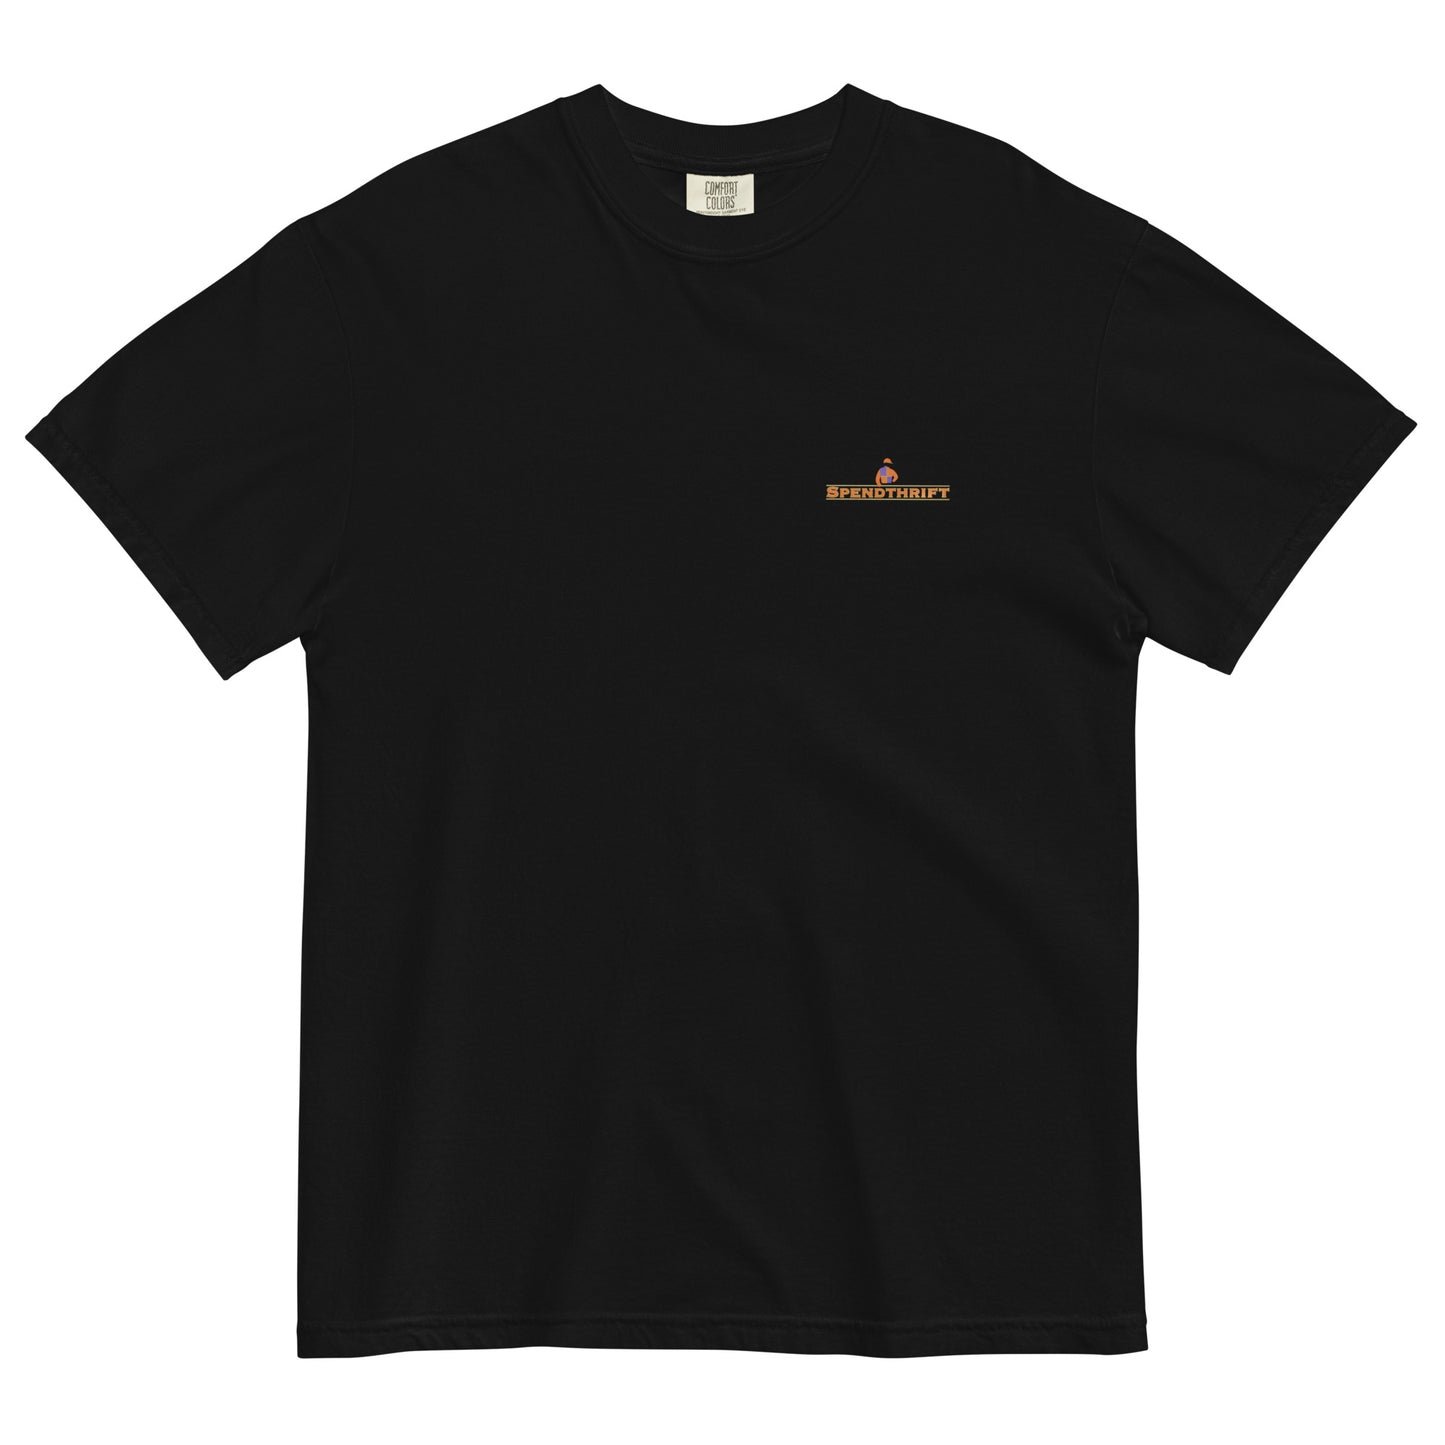 Unisex Authentic garment-dyed heavyweight t-shirt